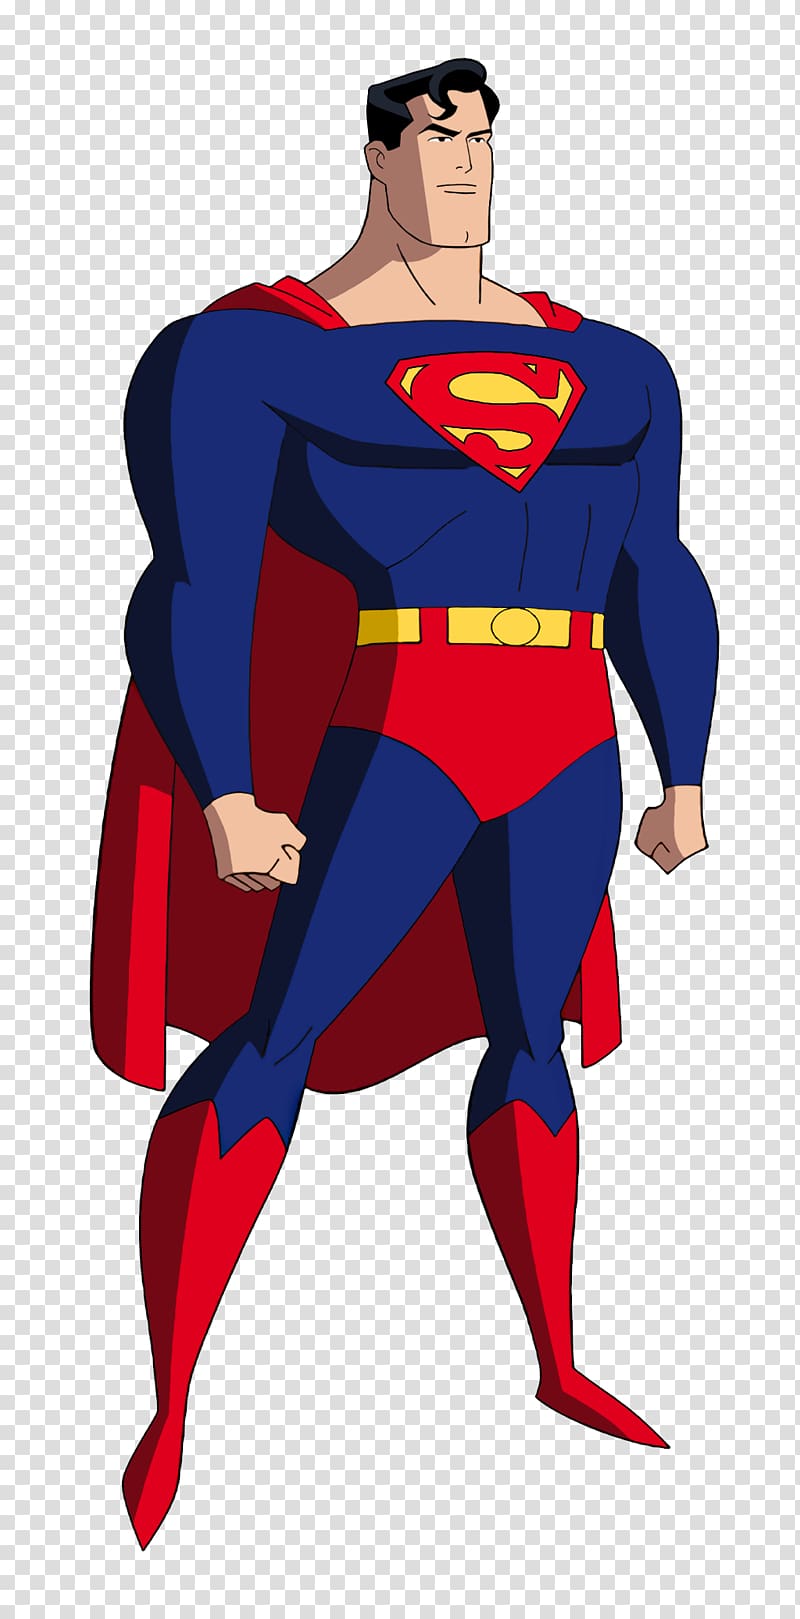 Superman Fleischer Studios Cartoon DC animated universe, cartoon superman transparent background PNG clipart